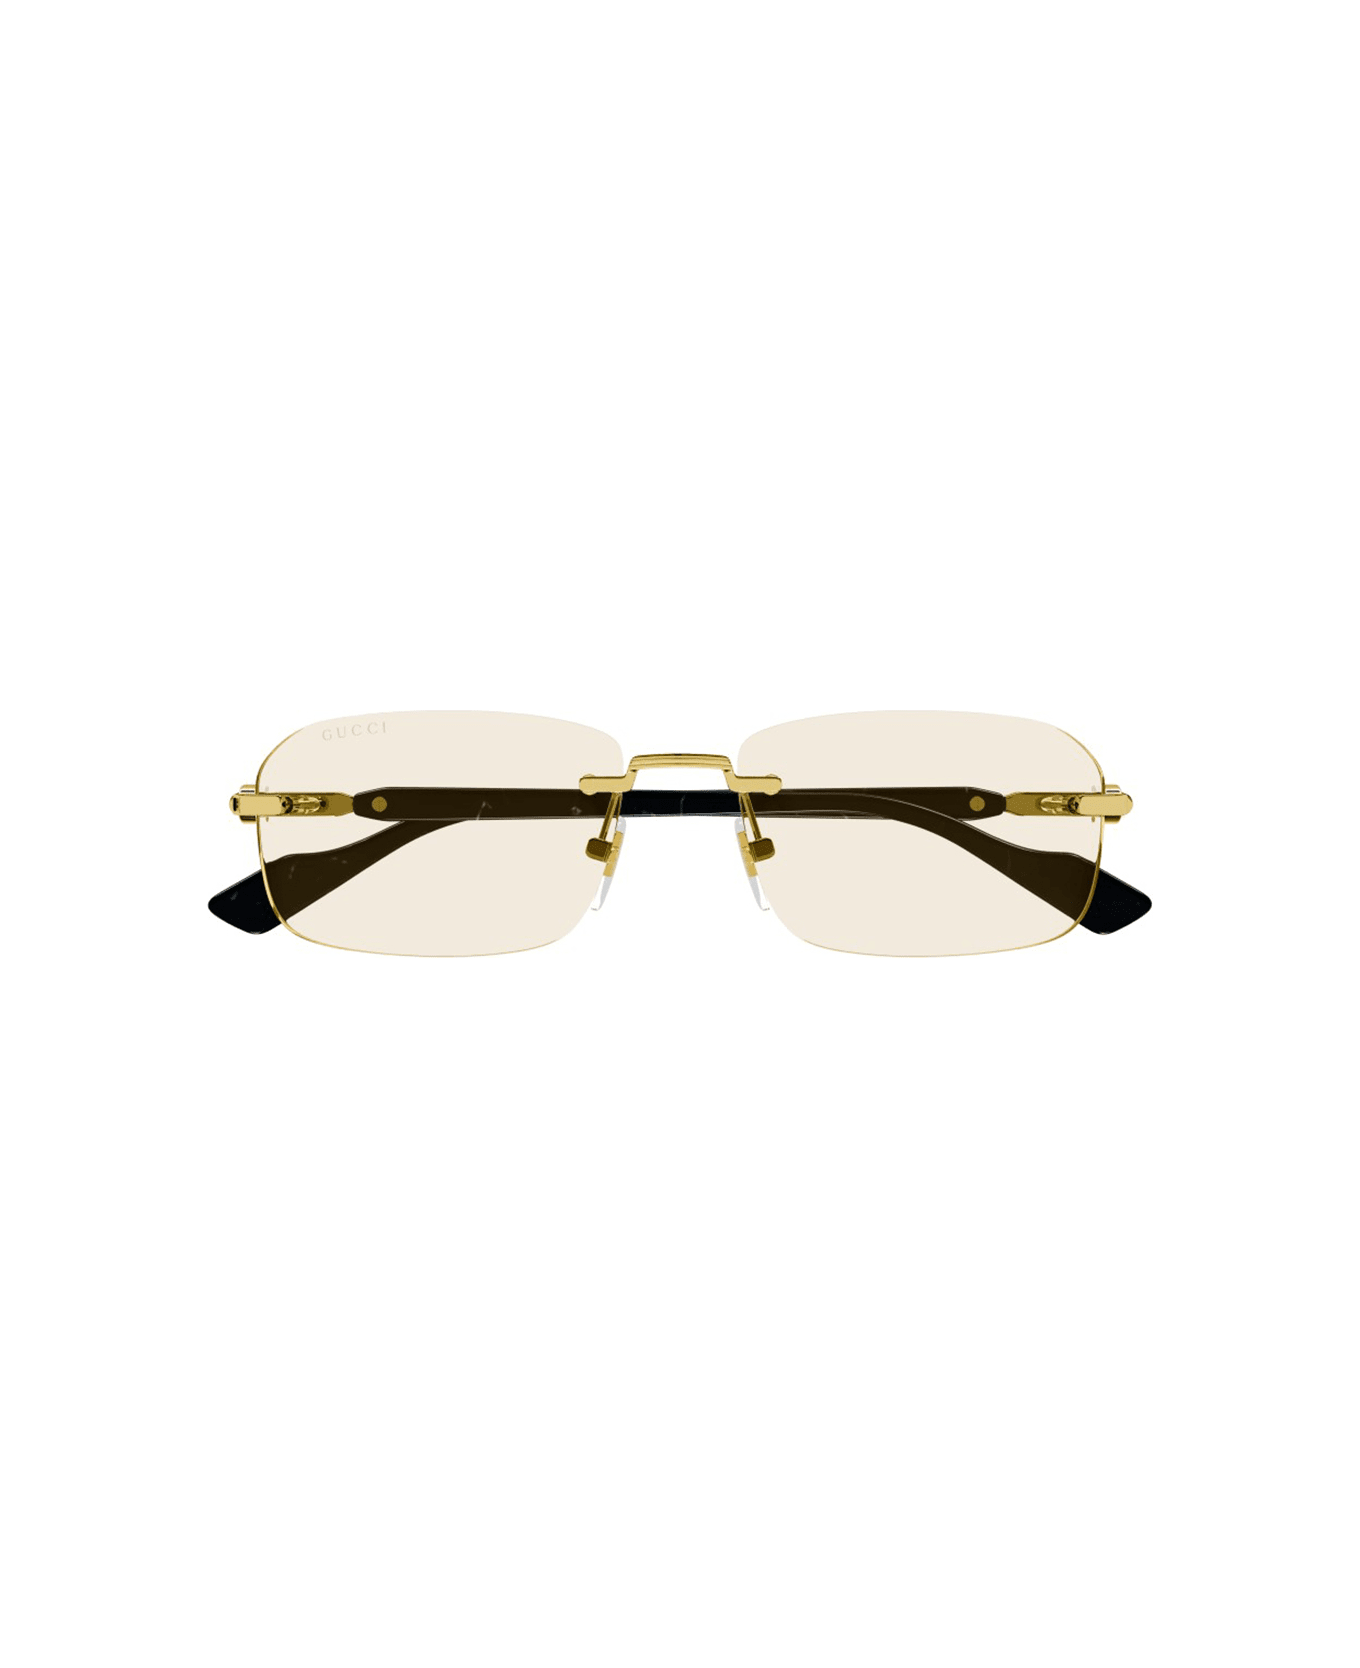 Gucci Eyewear Gg1221s Sunglasses - 005 gold black yellow サングラス